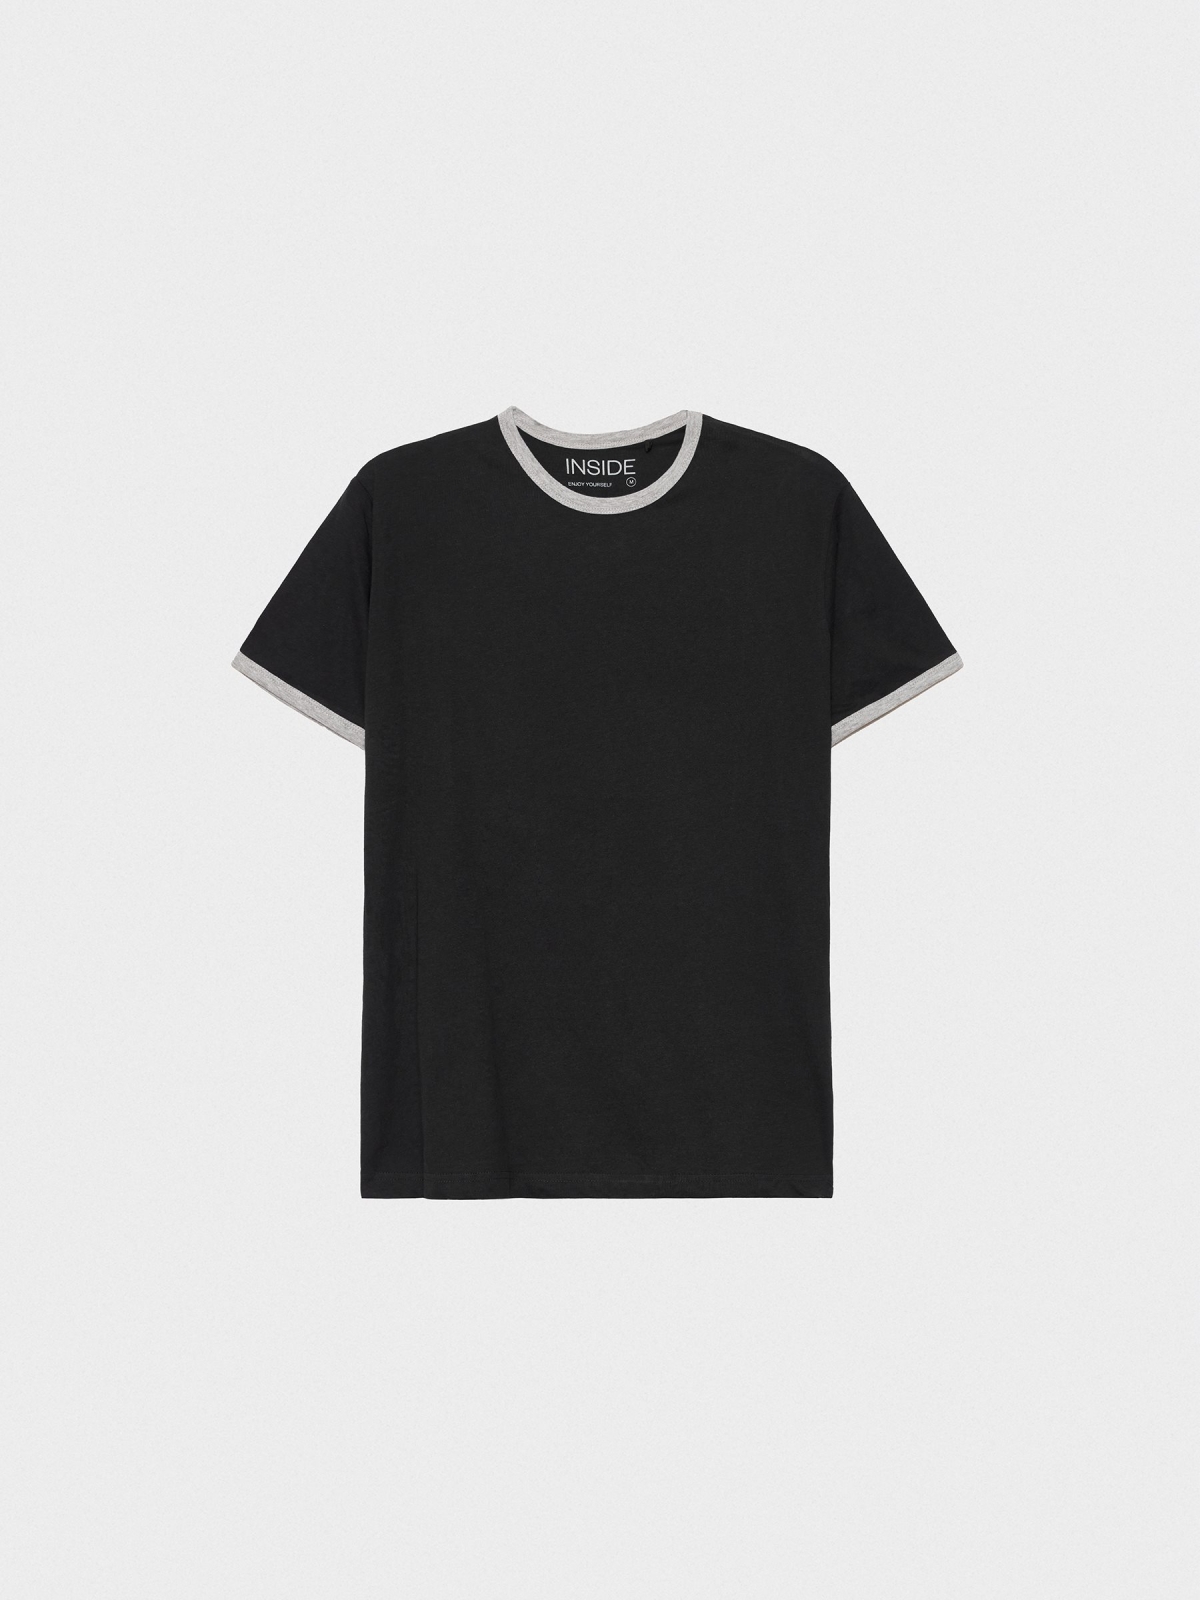  Camiseta básica contrastes negro